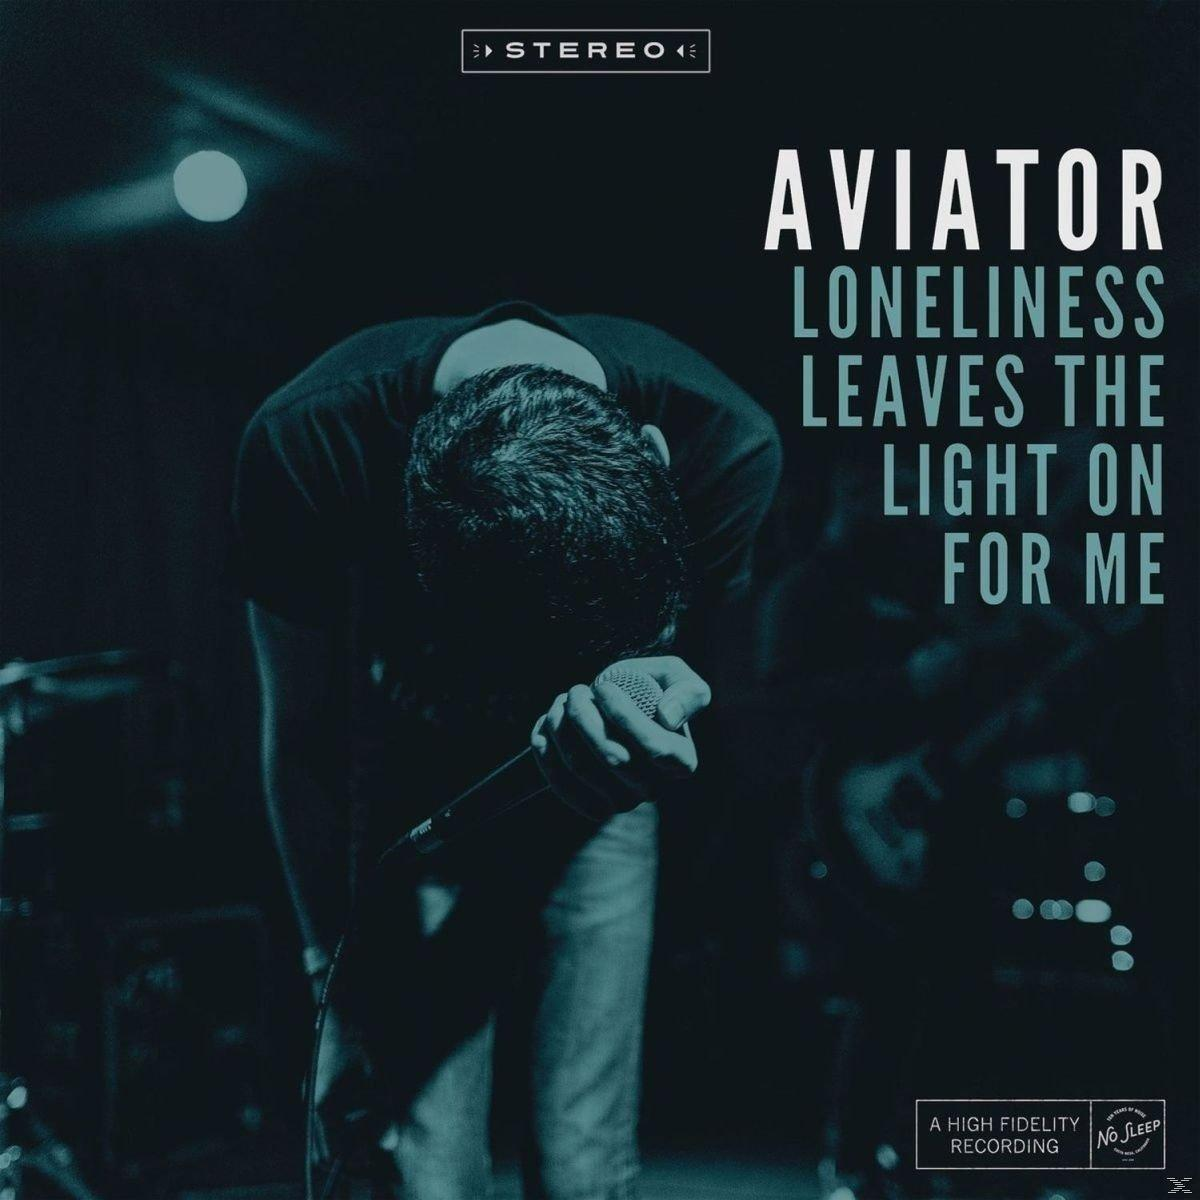 The Aviator - Loneliness Leaves On (Vinyl) Light The 